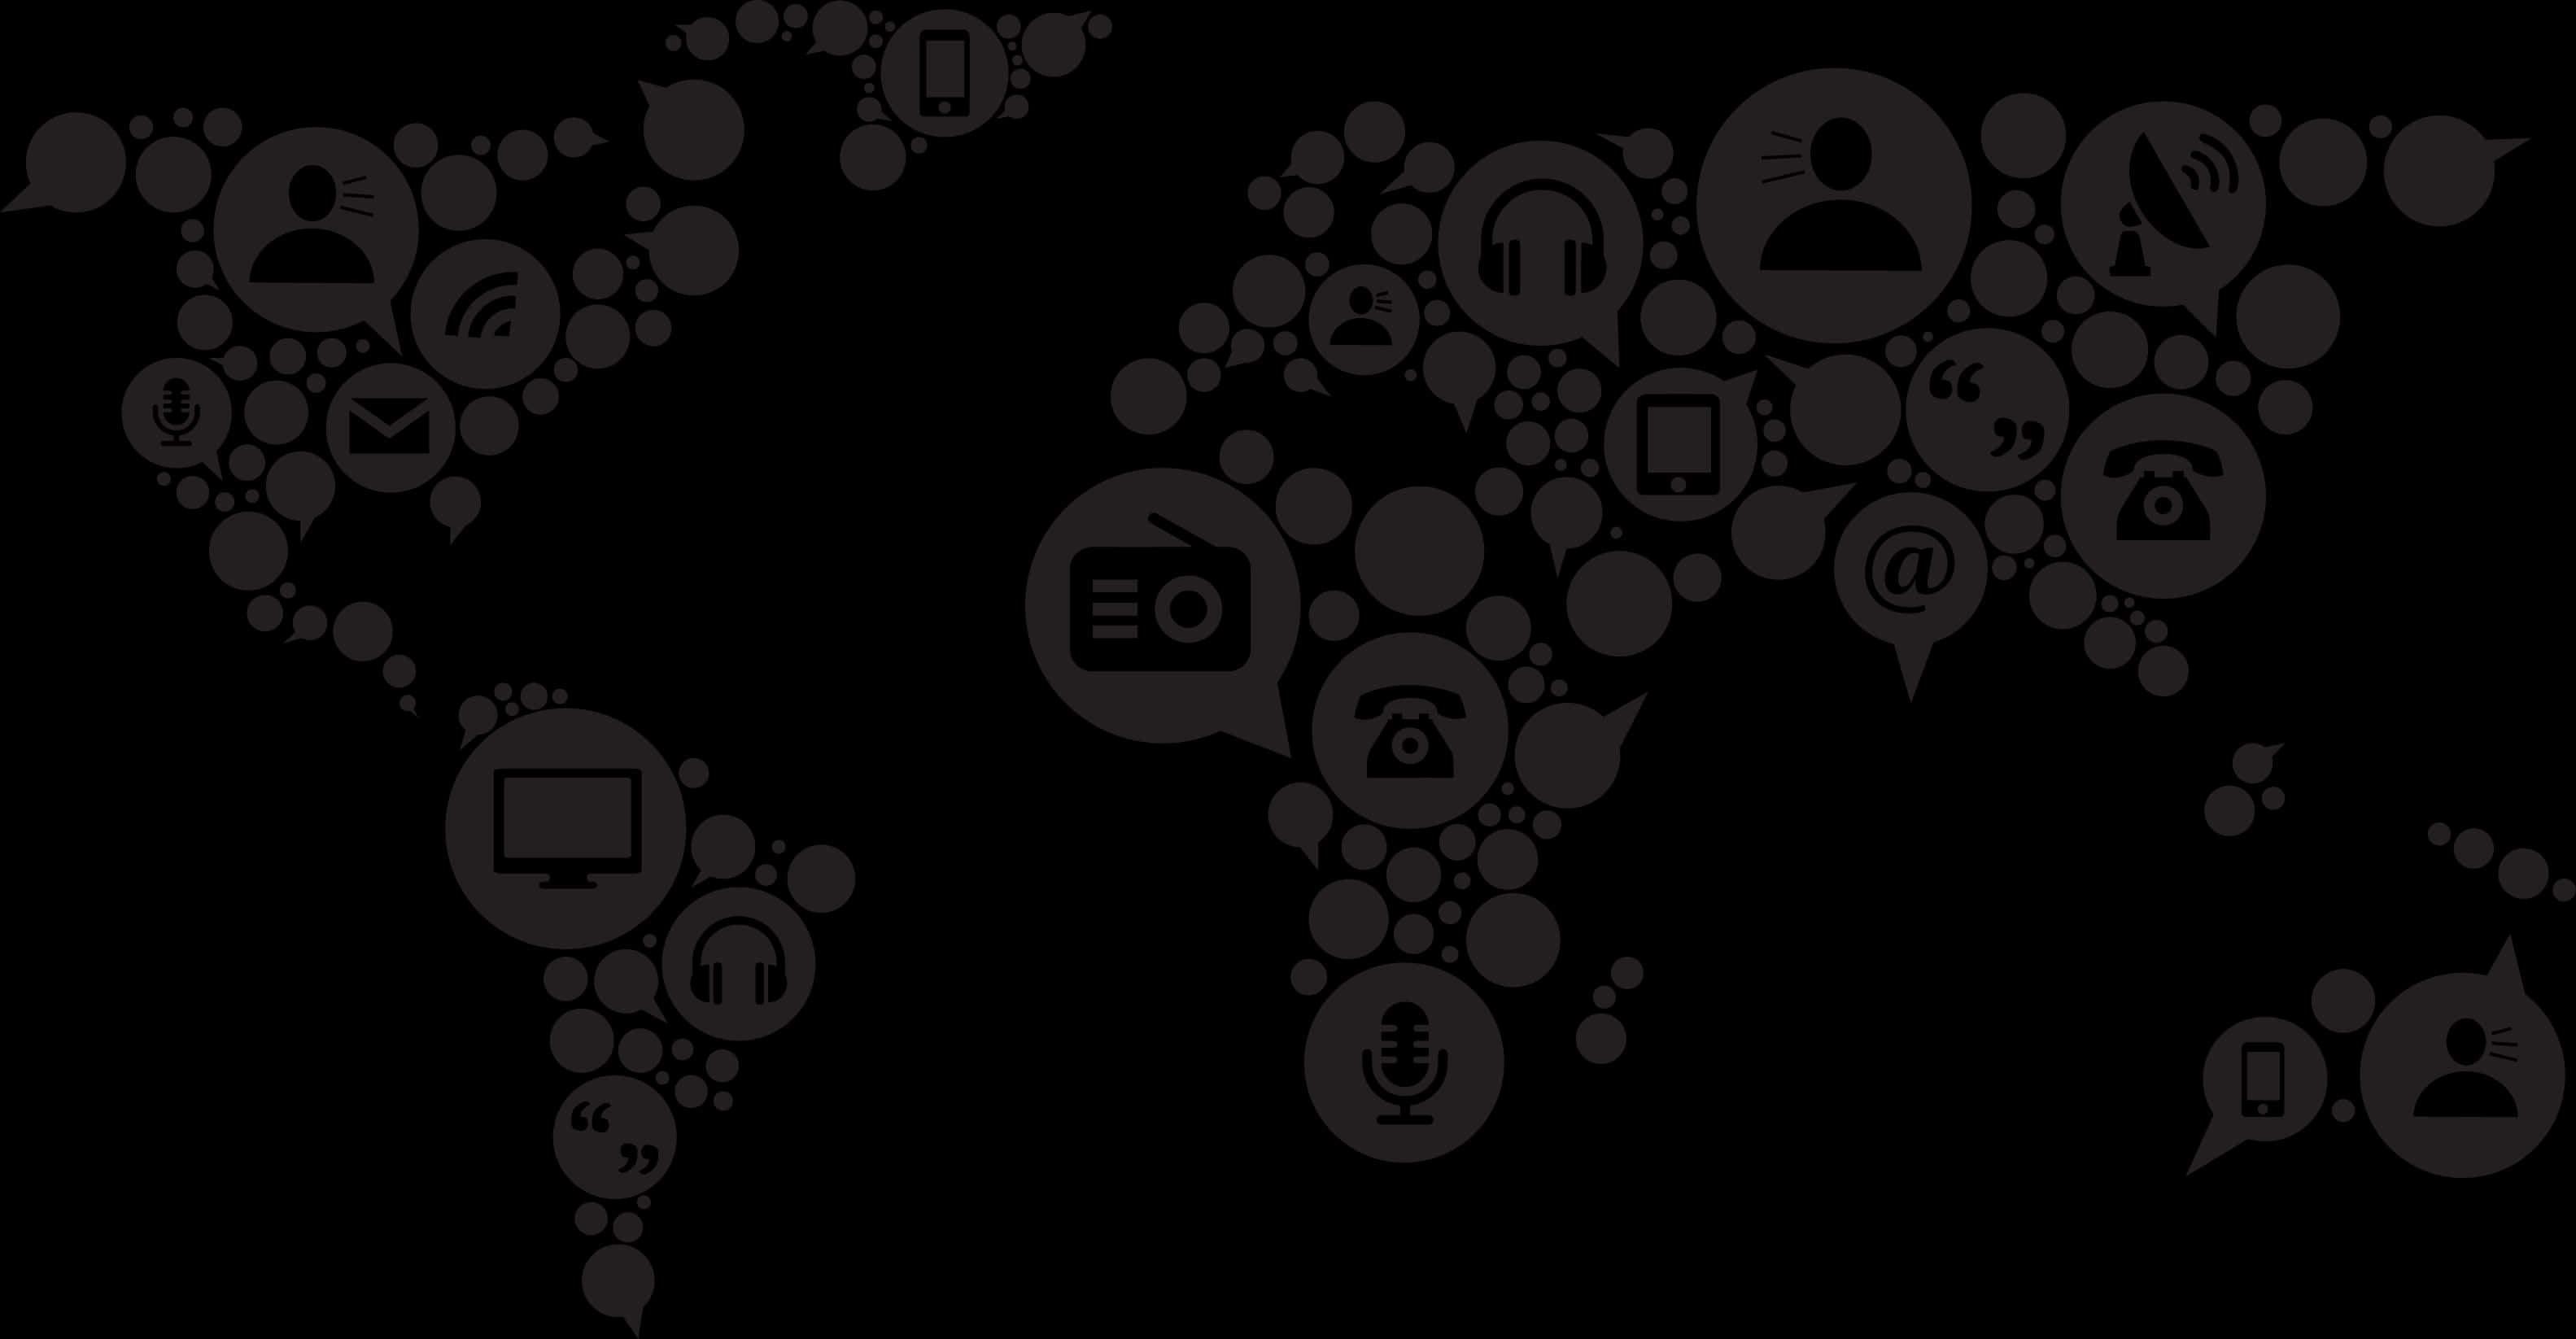 Communication Icons World Map PNG image